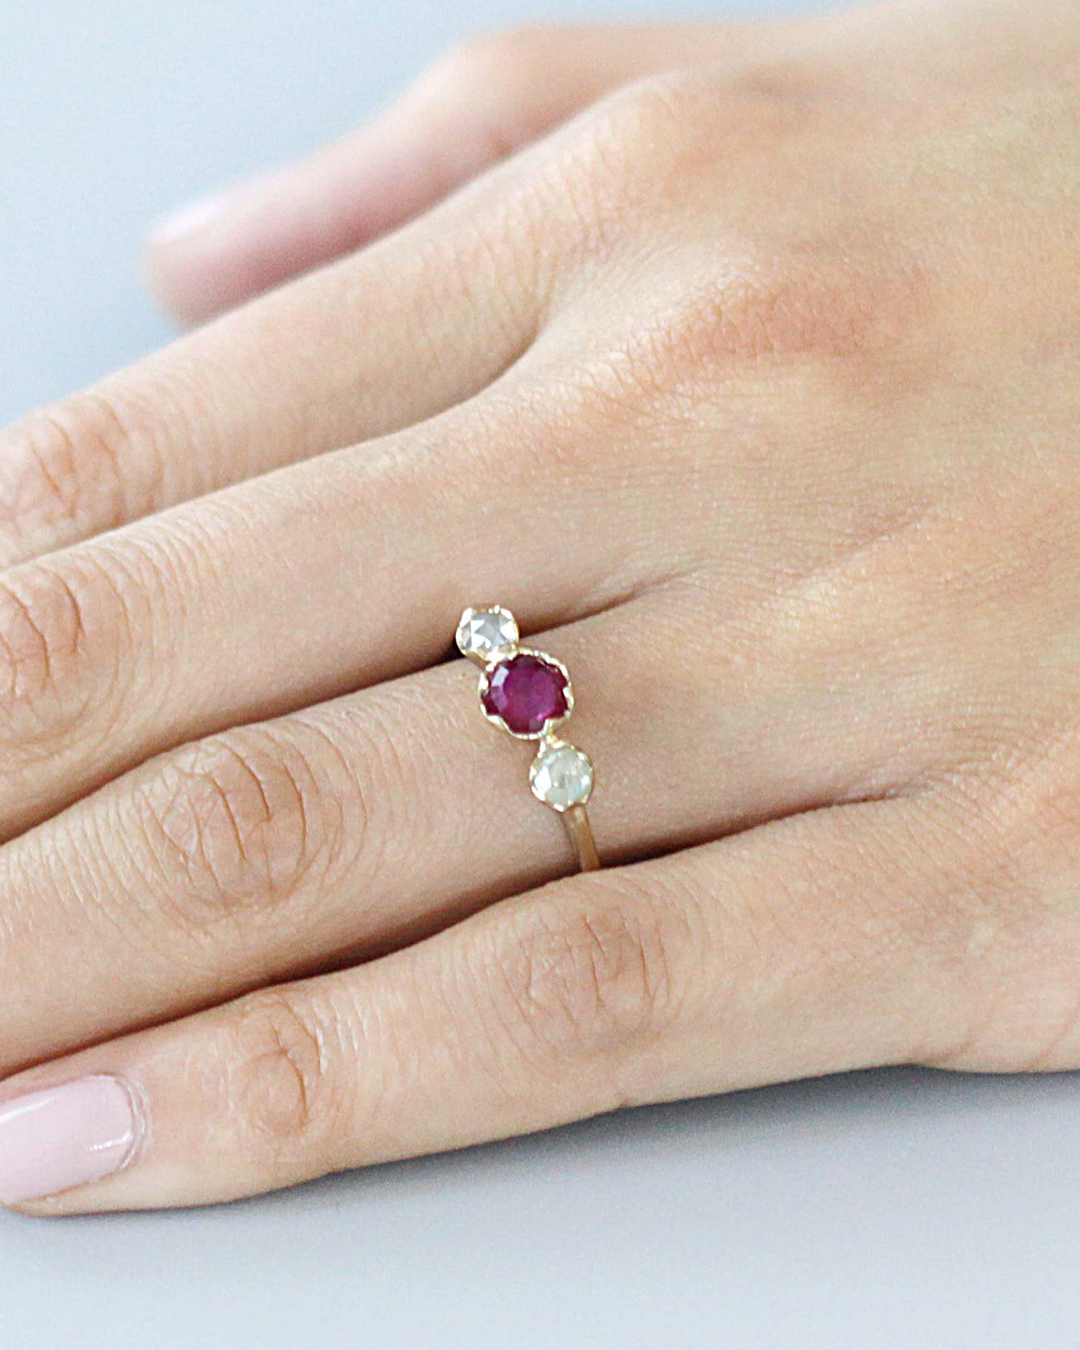 Pave 3 Stones / Ruby + Milky Diamonds By fitzgerald jewelry